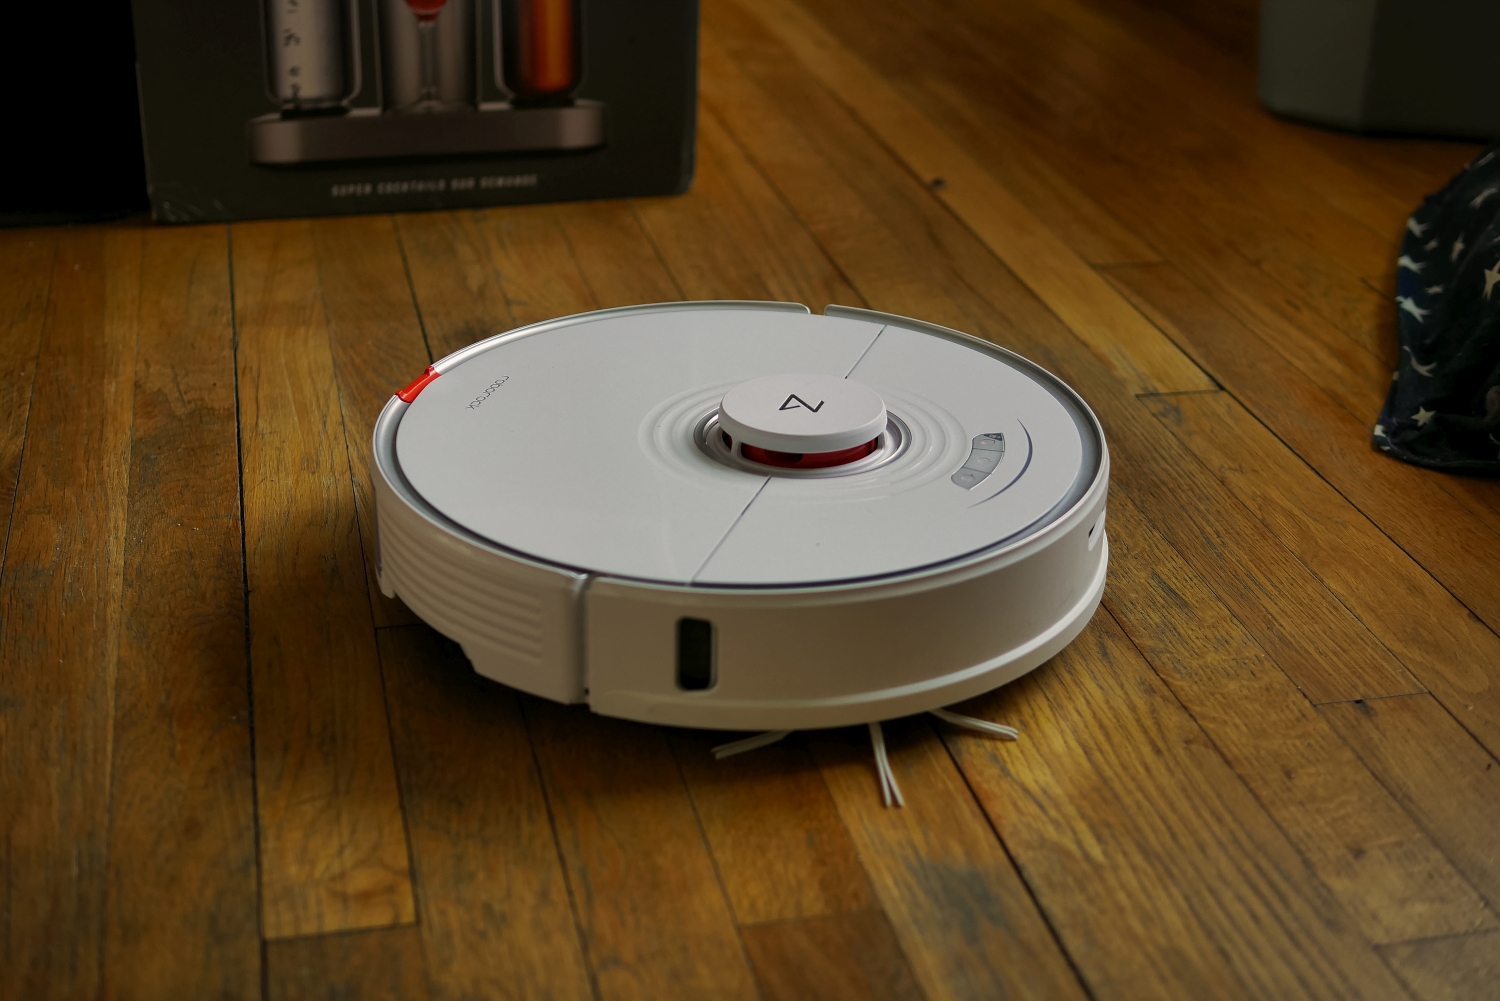 Roborock S7 Vacuum Cleaner Review - Consumer Reports